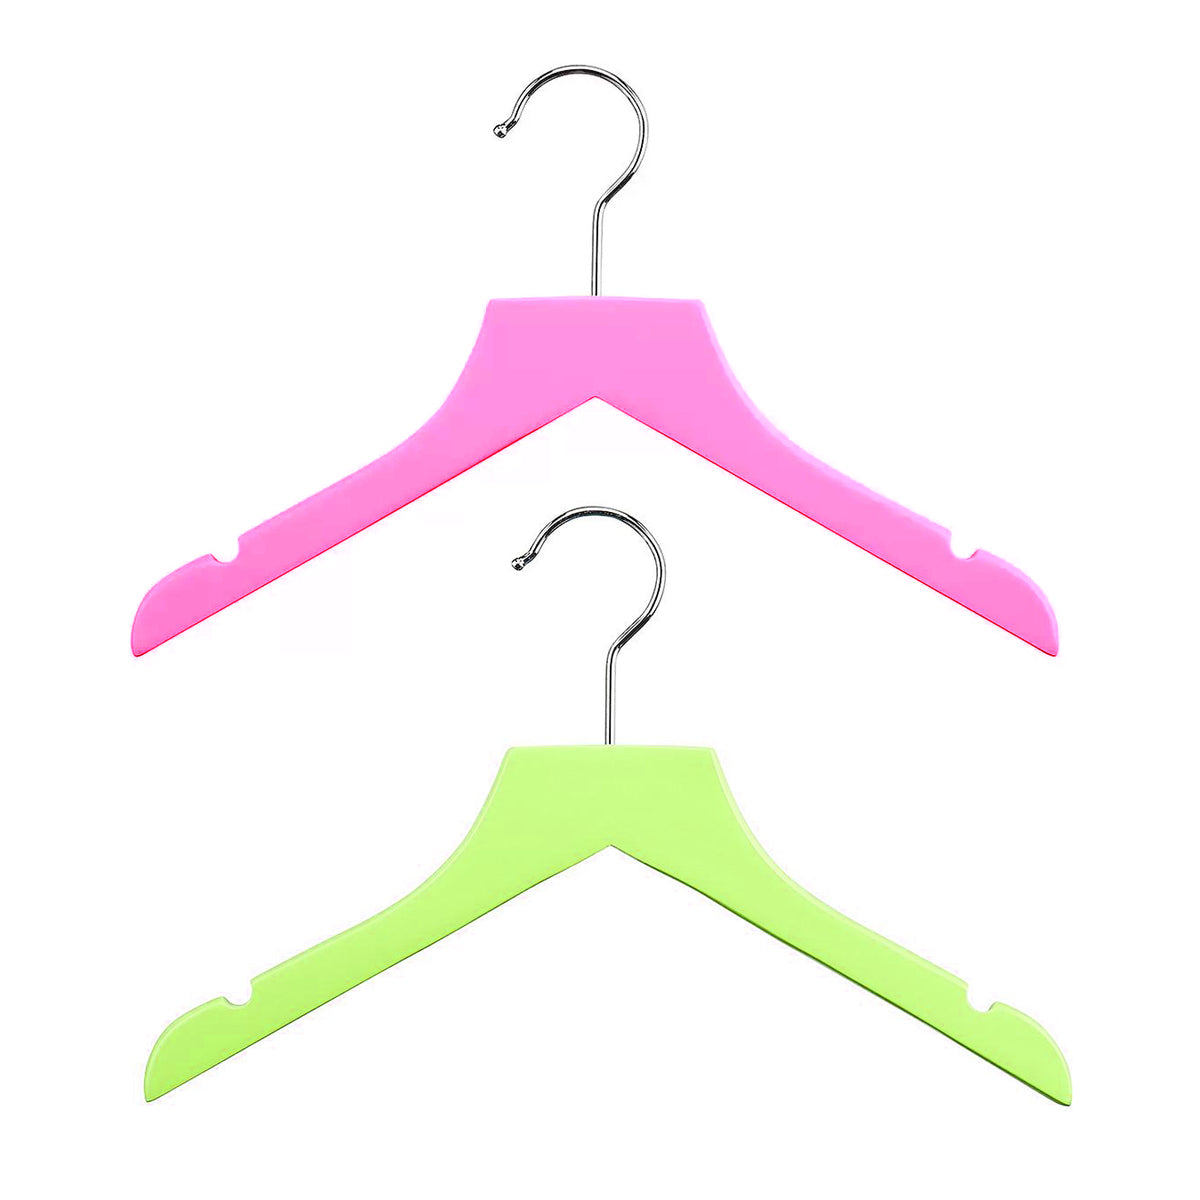 LARGE LOT of 53 :Non-Slip Clothing Hangers 360 Swivel Neck~White Durable  Plastic